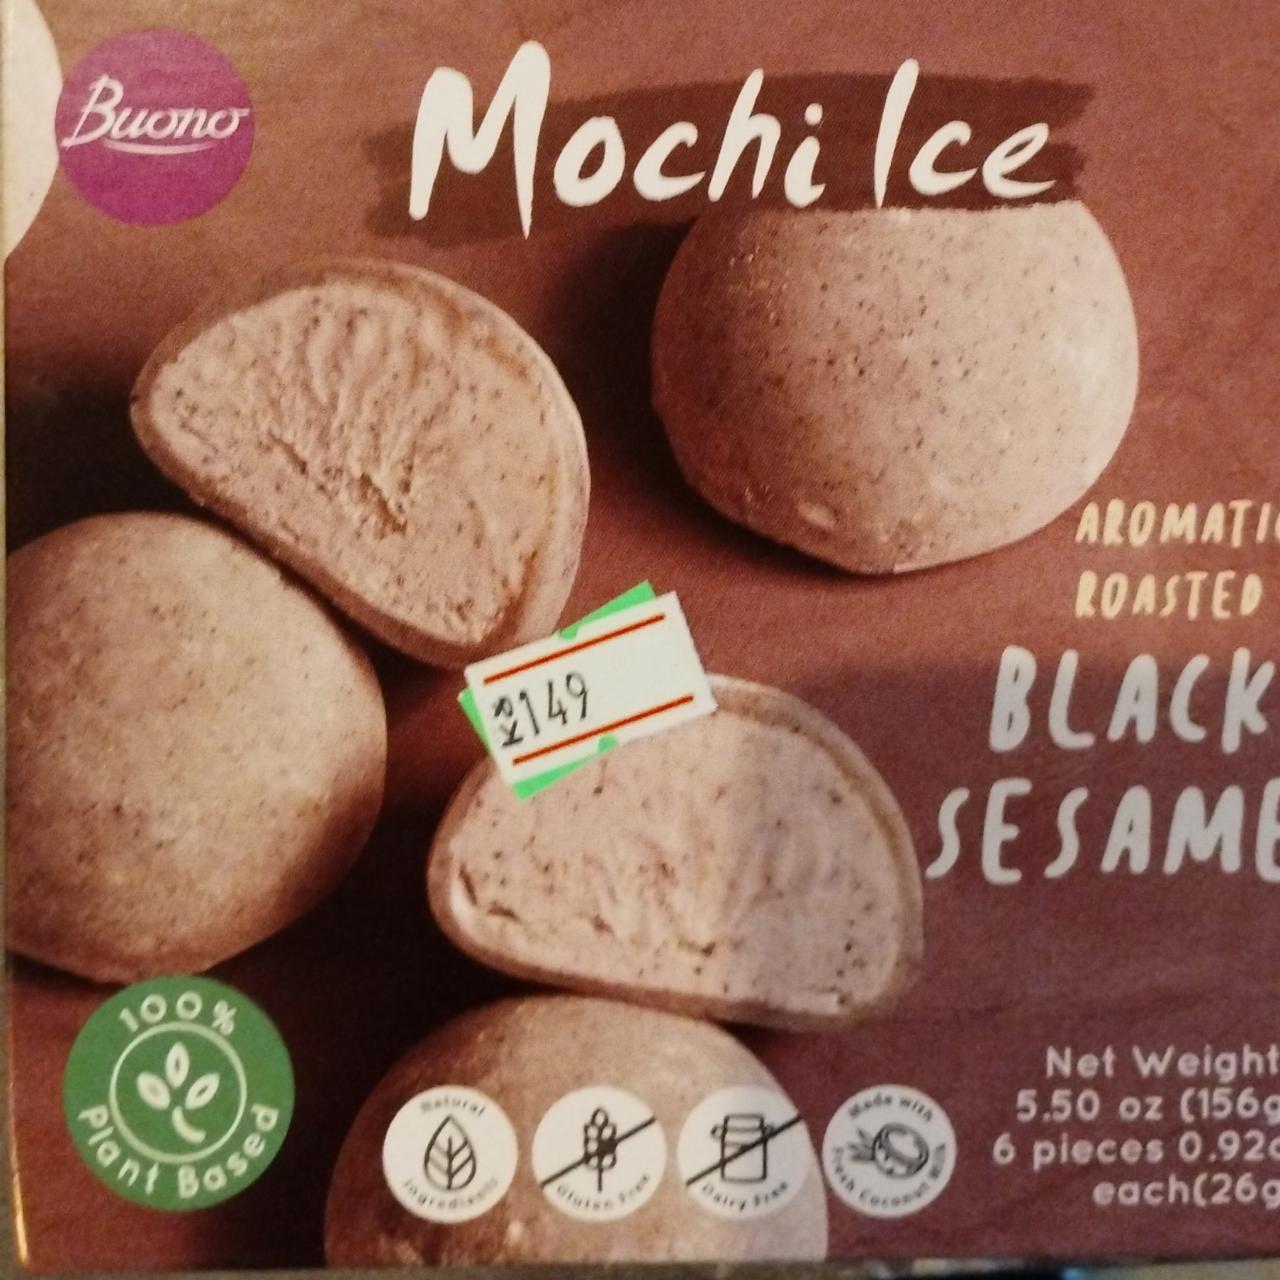 Fotografie - Mochi Ice Dessert Black Sesame Buono